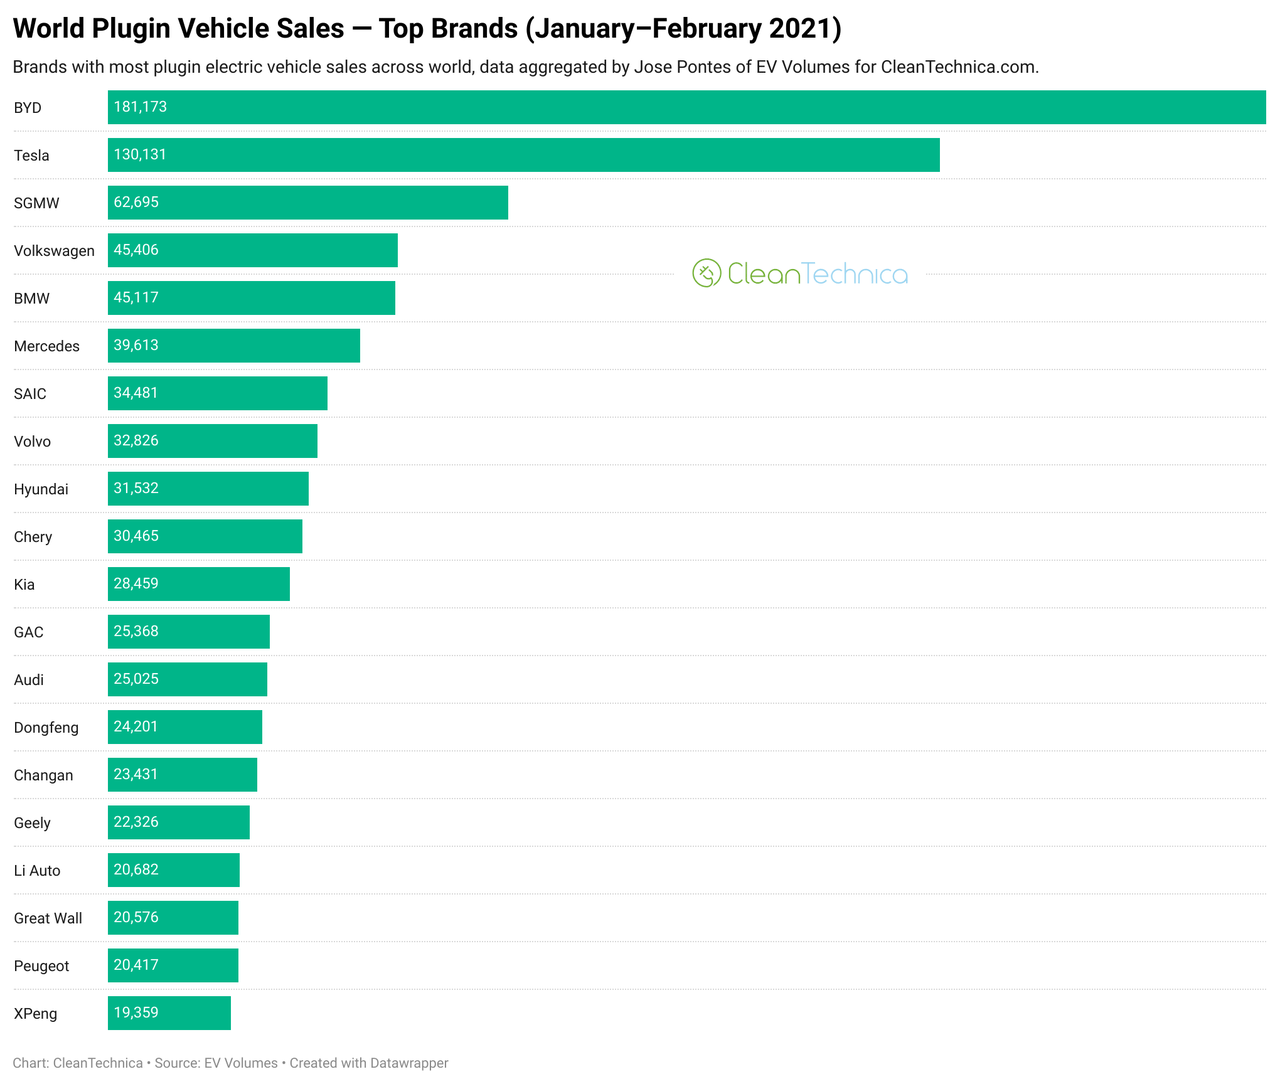 Global plugin electric car sales by brand YTD in 2022